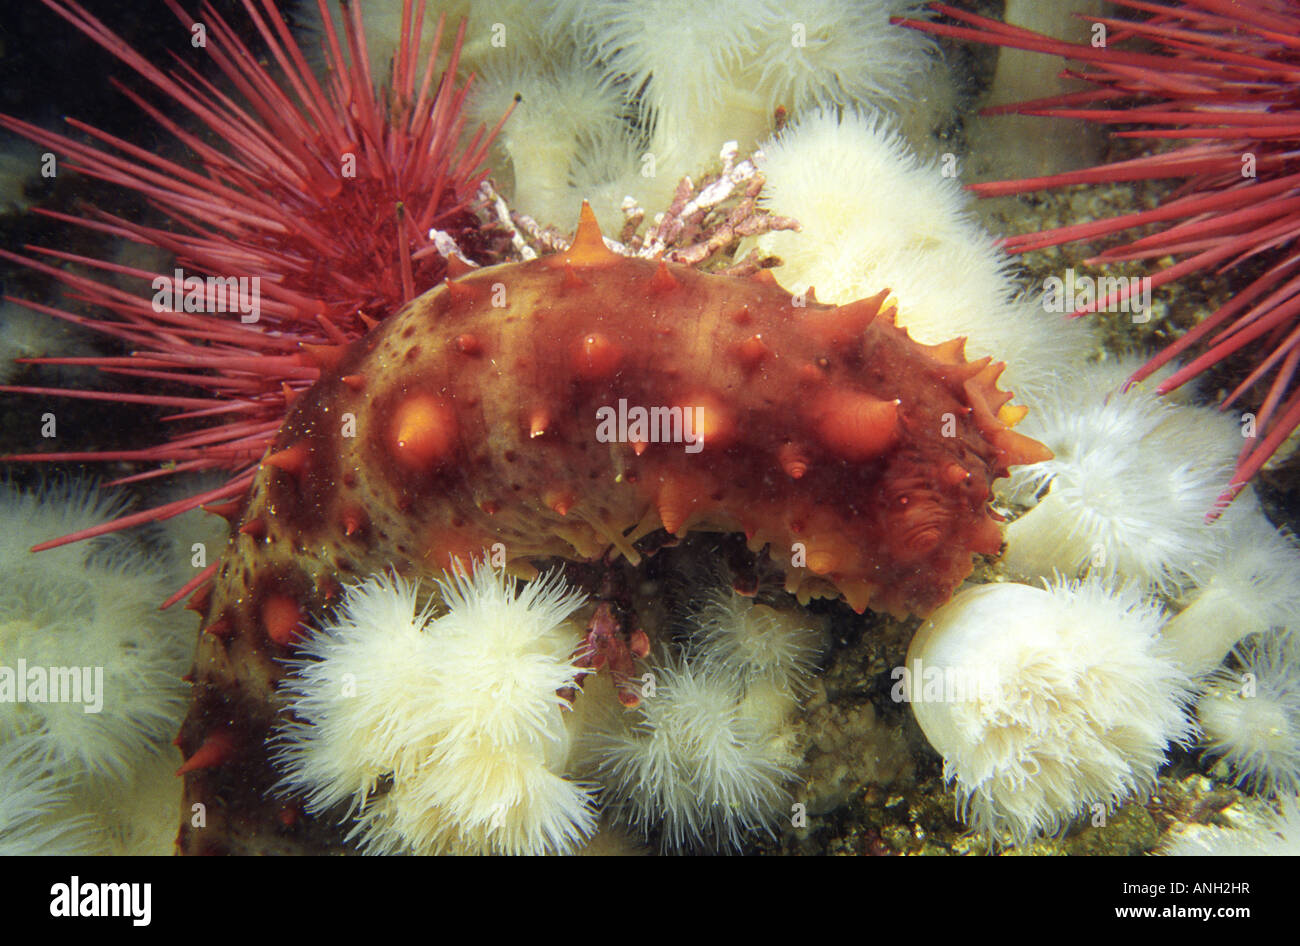 California sea cucumber, Seven-tree Island, Queen Charlotte Strait, Vancouver Island, British Columbia, Canada. Stock Photo